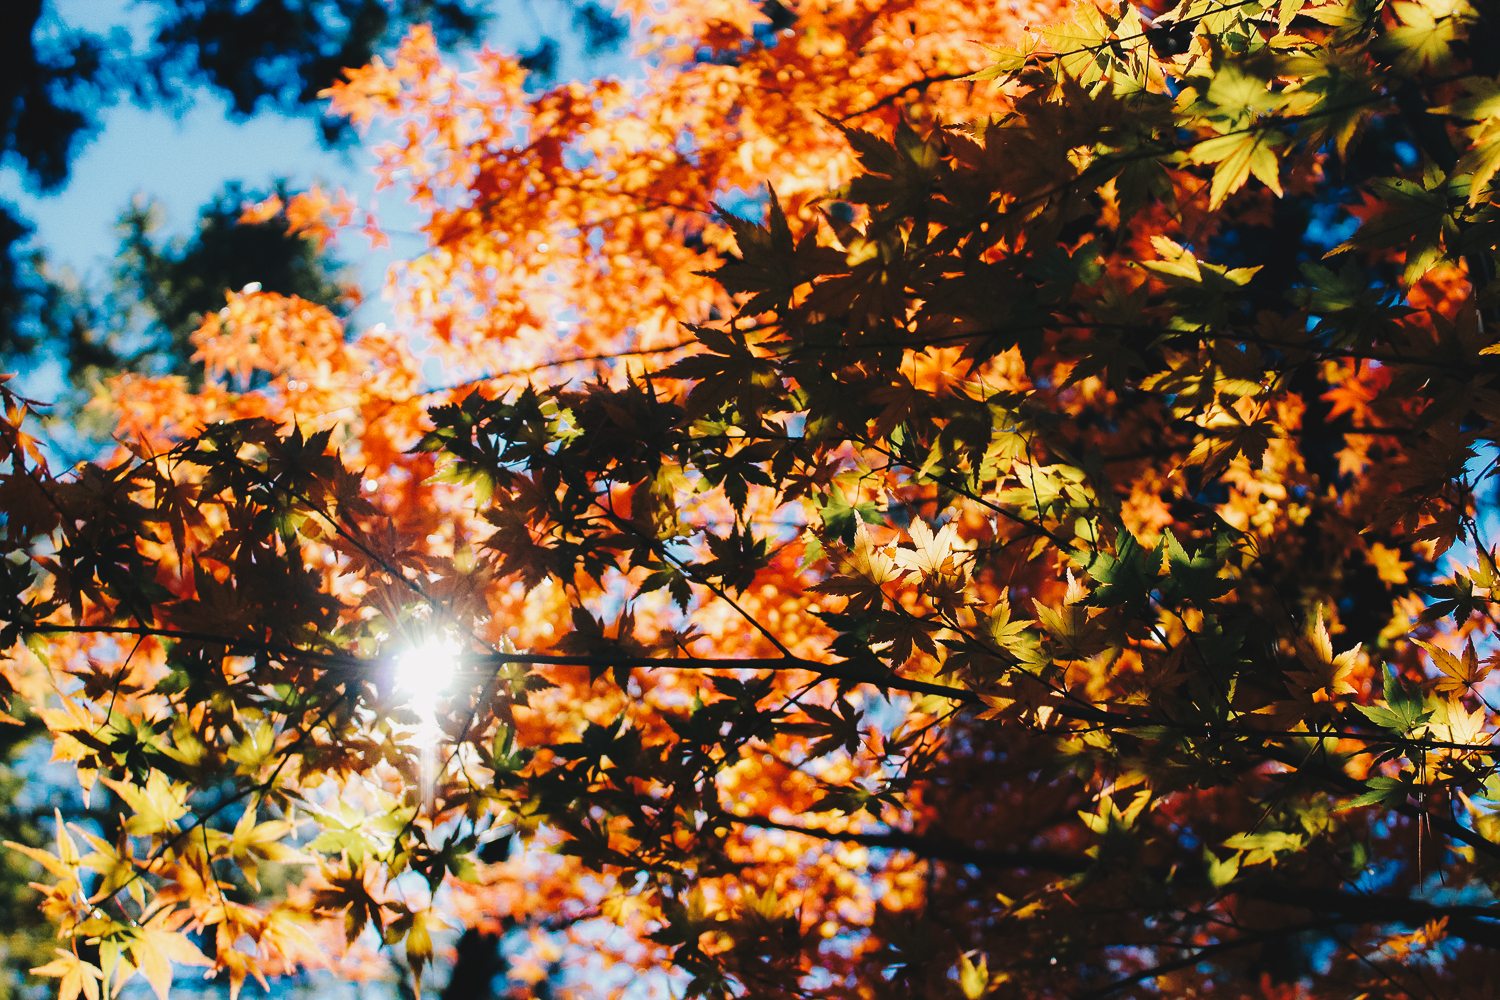 Sun shining through the leaves as they turn orange with autumn season